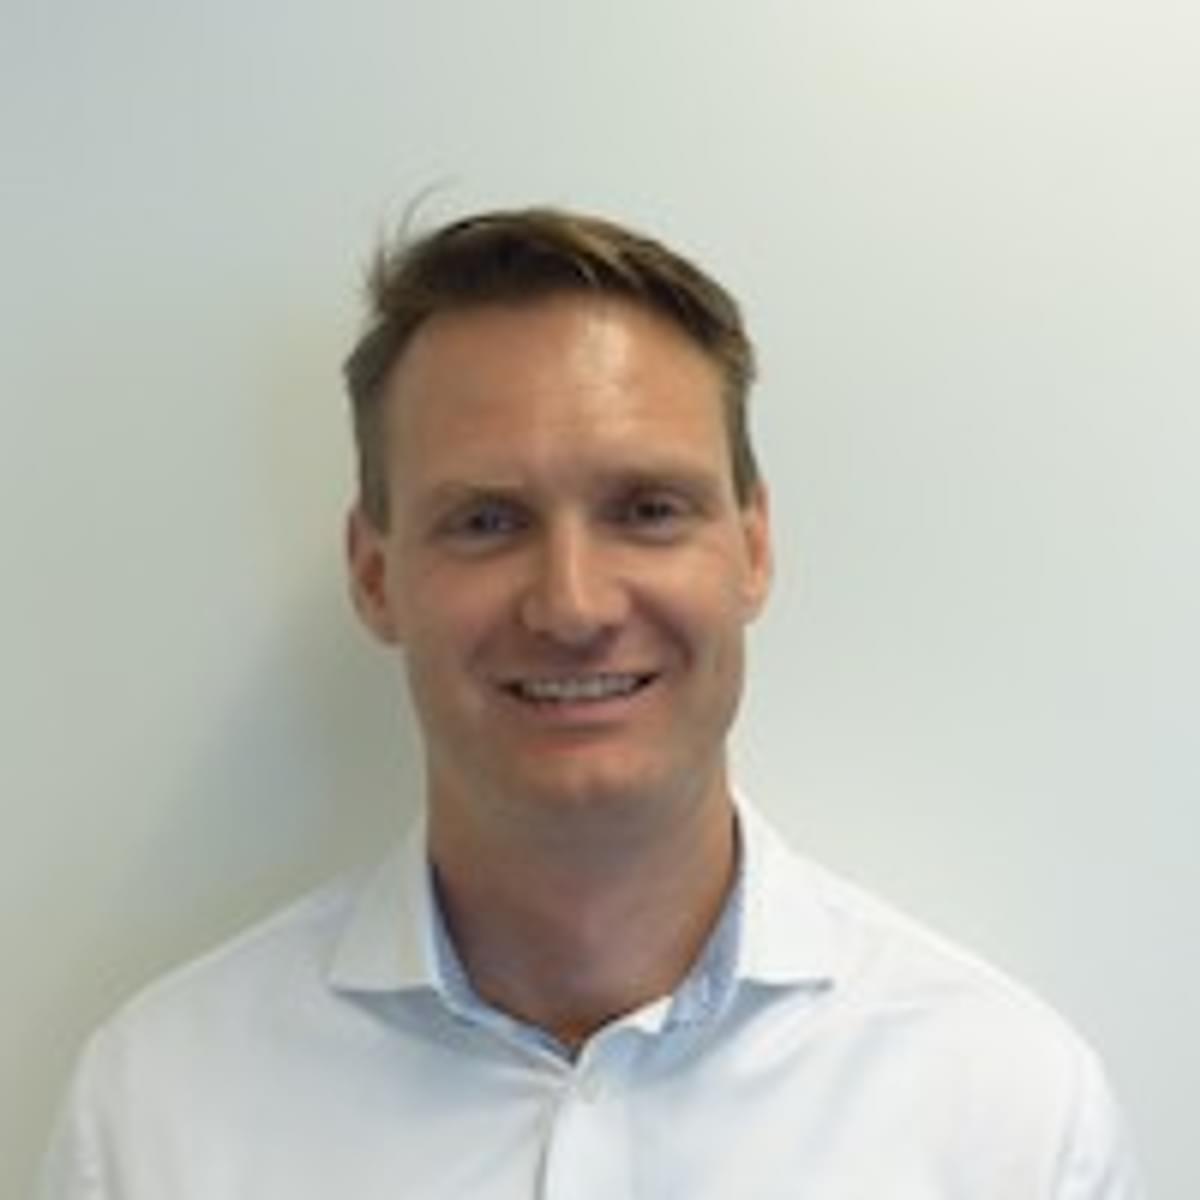 Leaseweb benoemt Mathijs Heikamp tot global product manager Dedicated Servers & Colocation image